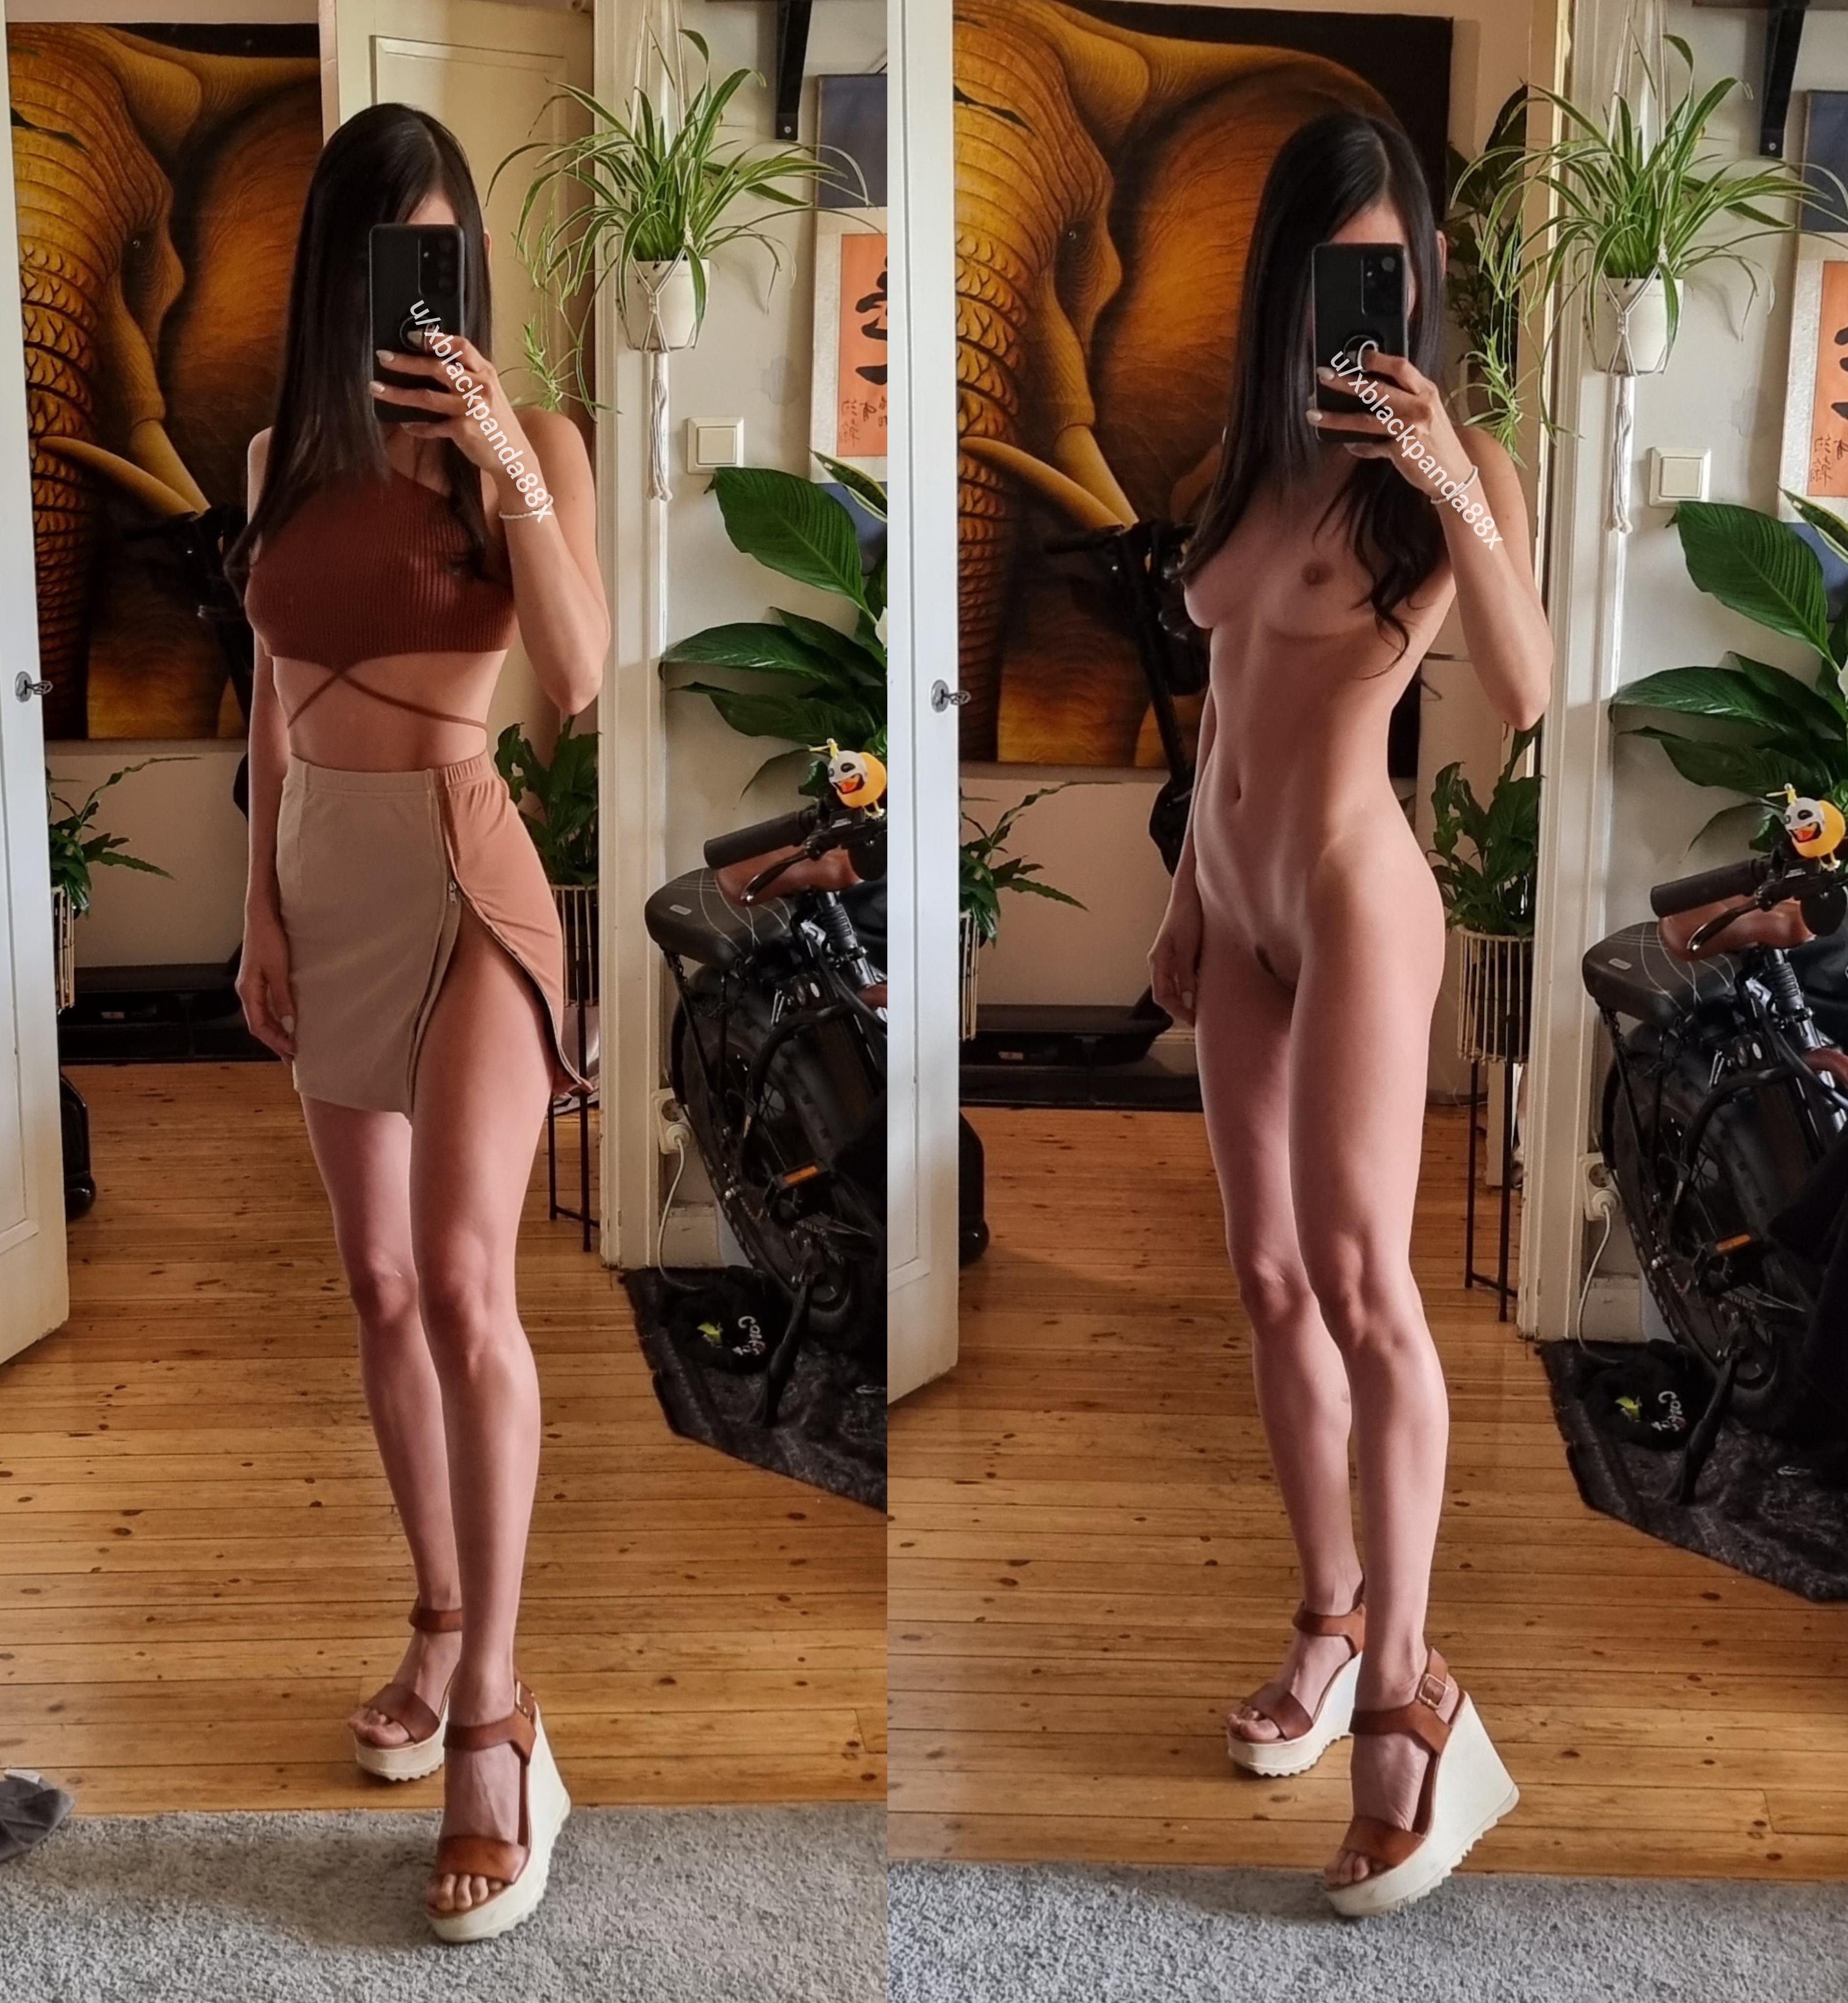 Tight dress obssession✌️34 year old Filipina mOm body photo